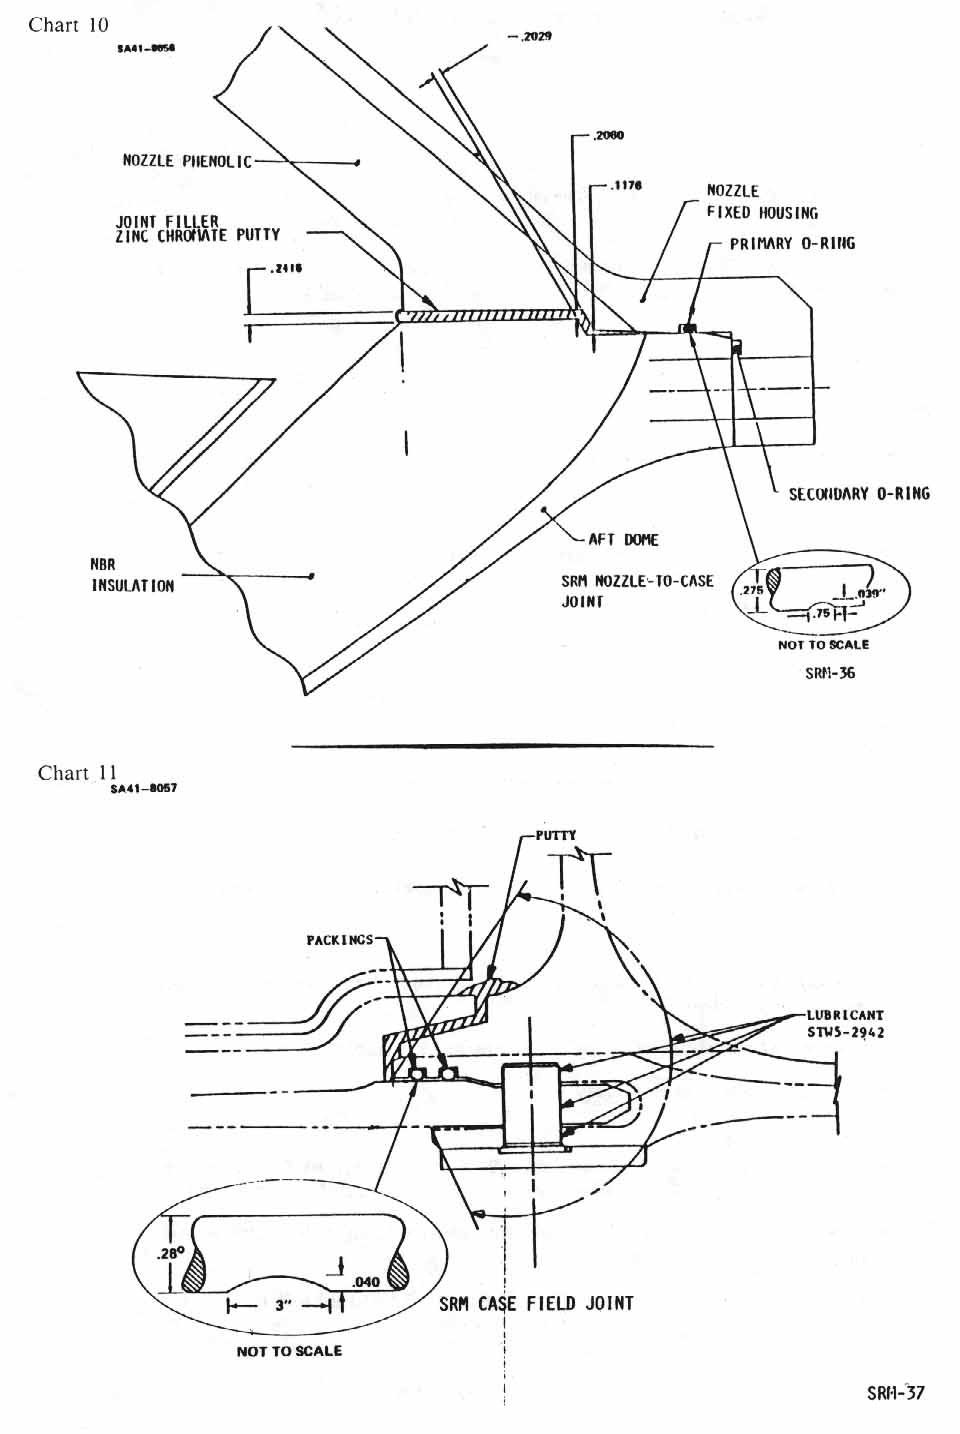 Chart 10: SRM Nozzle-to-case joint; Chart 11: SRM case field joint